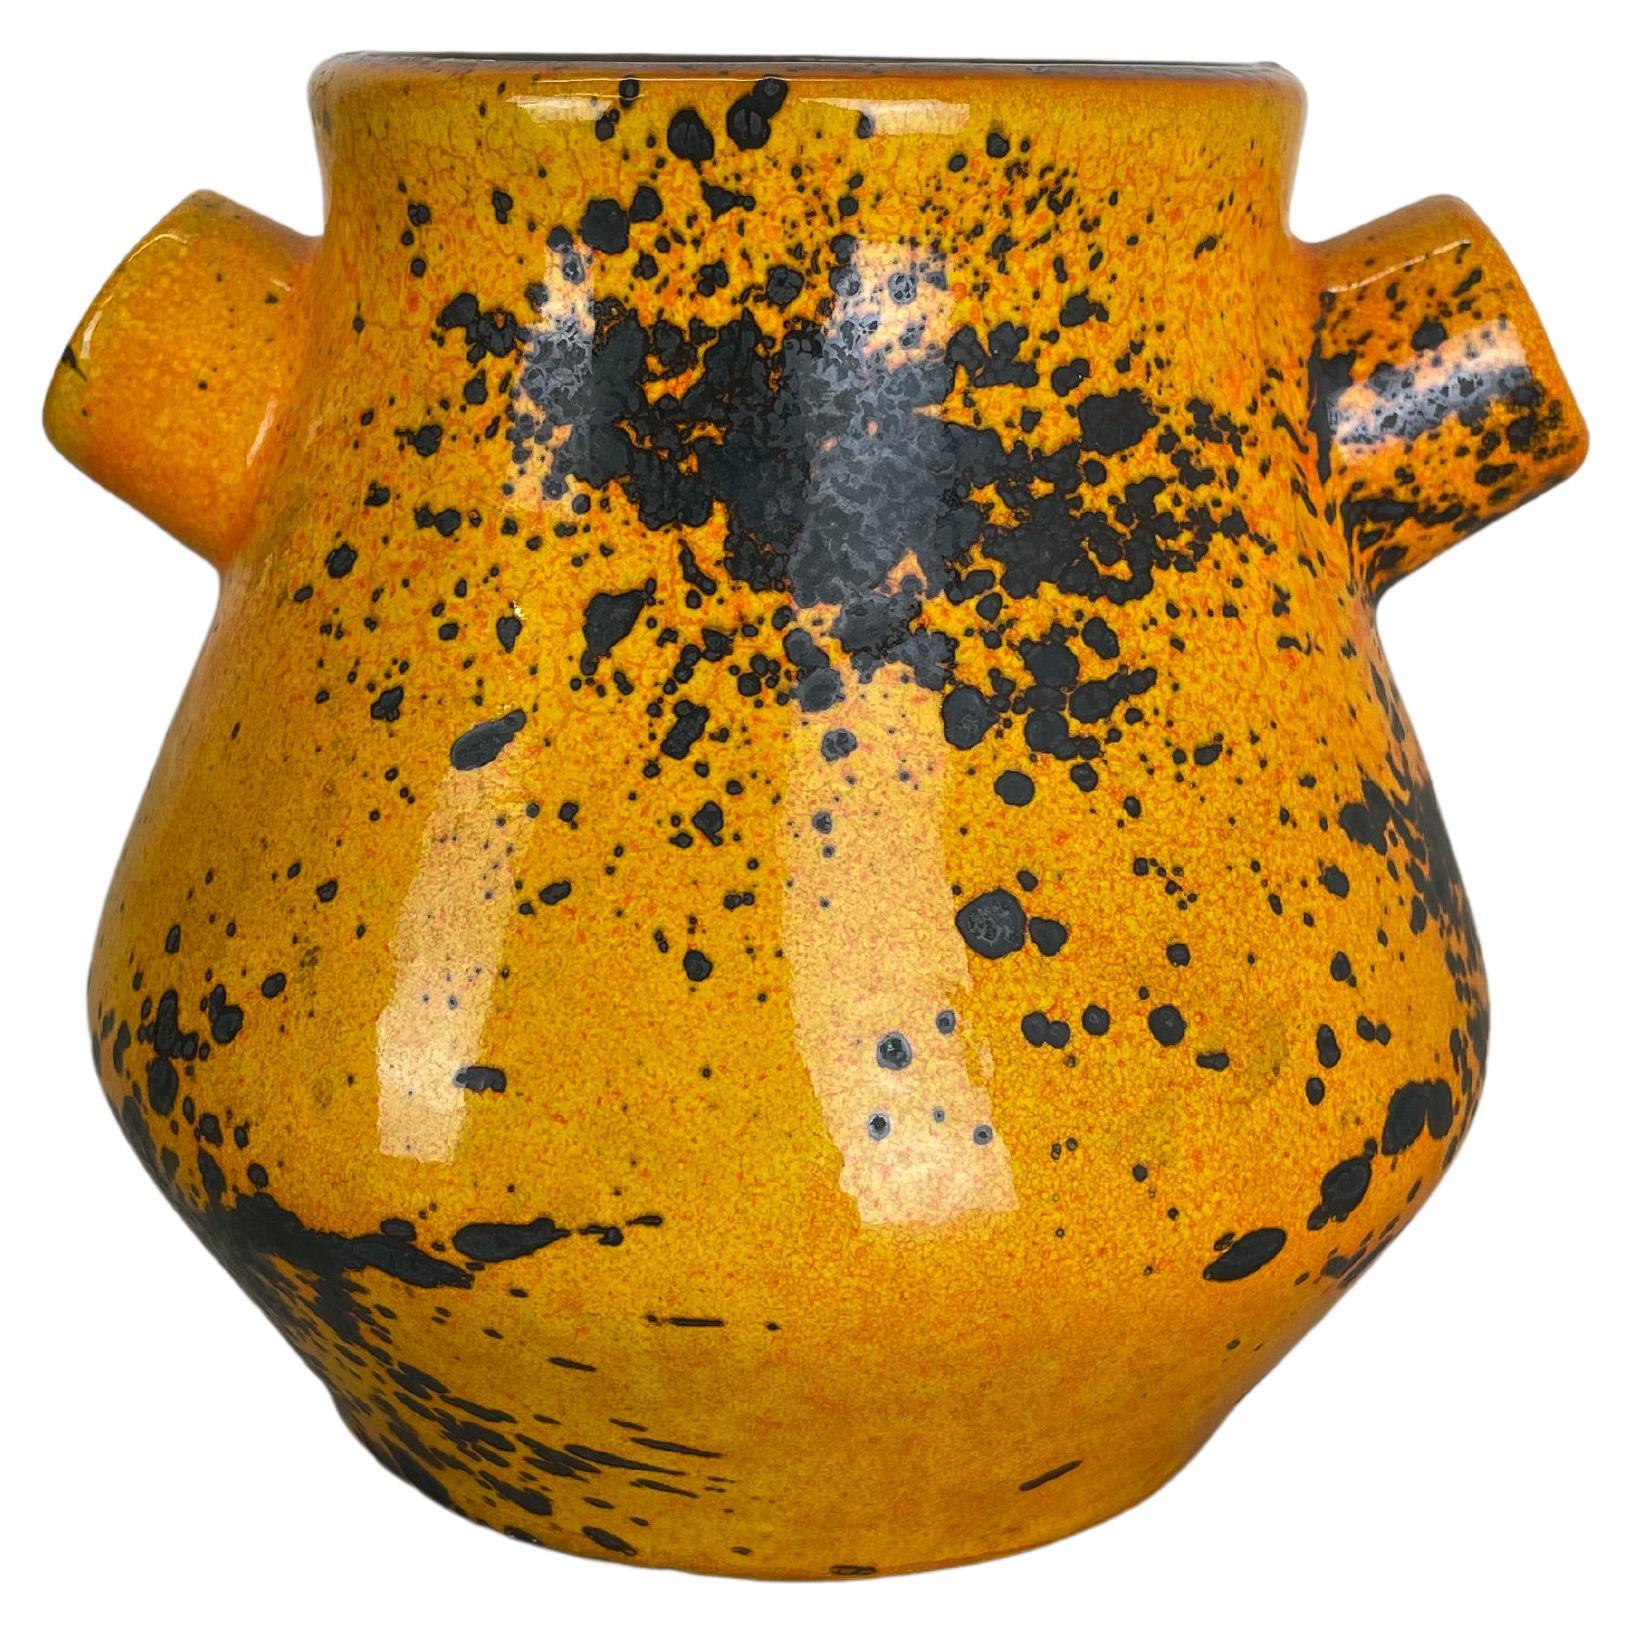 Originale orangefarbene Studio-Keramik-Vase von Marei Ceramics, Deutschland 1970er Jahre